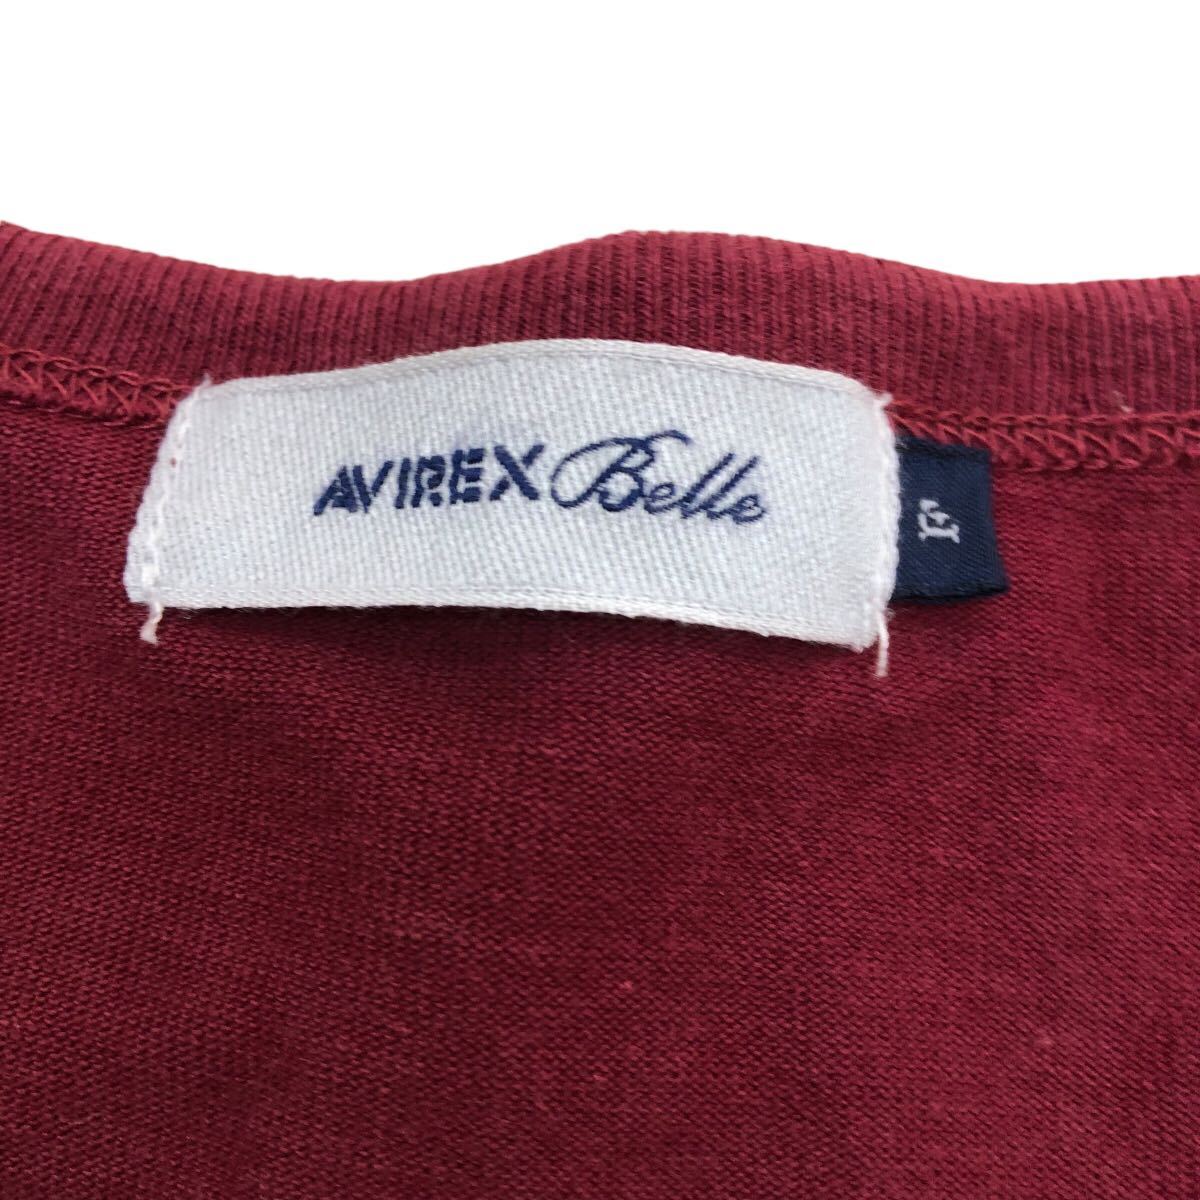 S206 AVIREX Belle Avirex bell футболка короткий рукав футболка tops большой Silhouette хлопок 100% женский F красный красный 